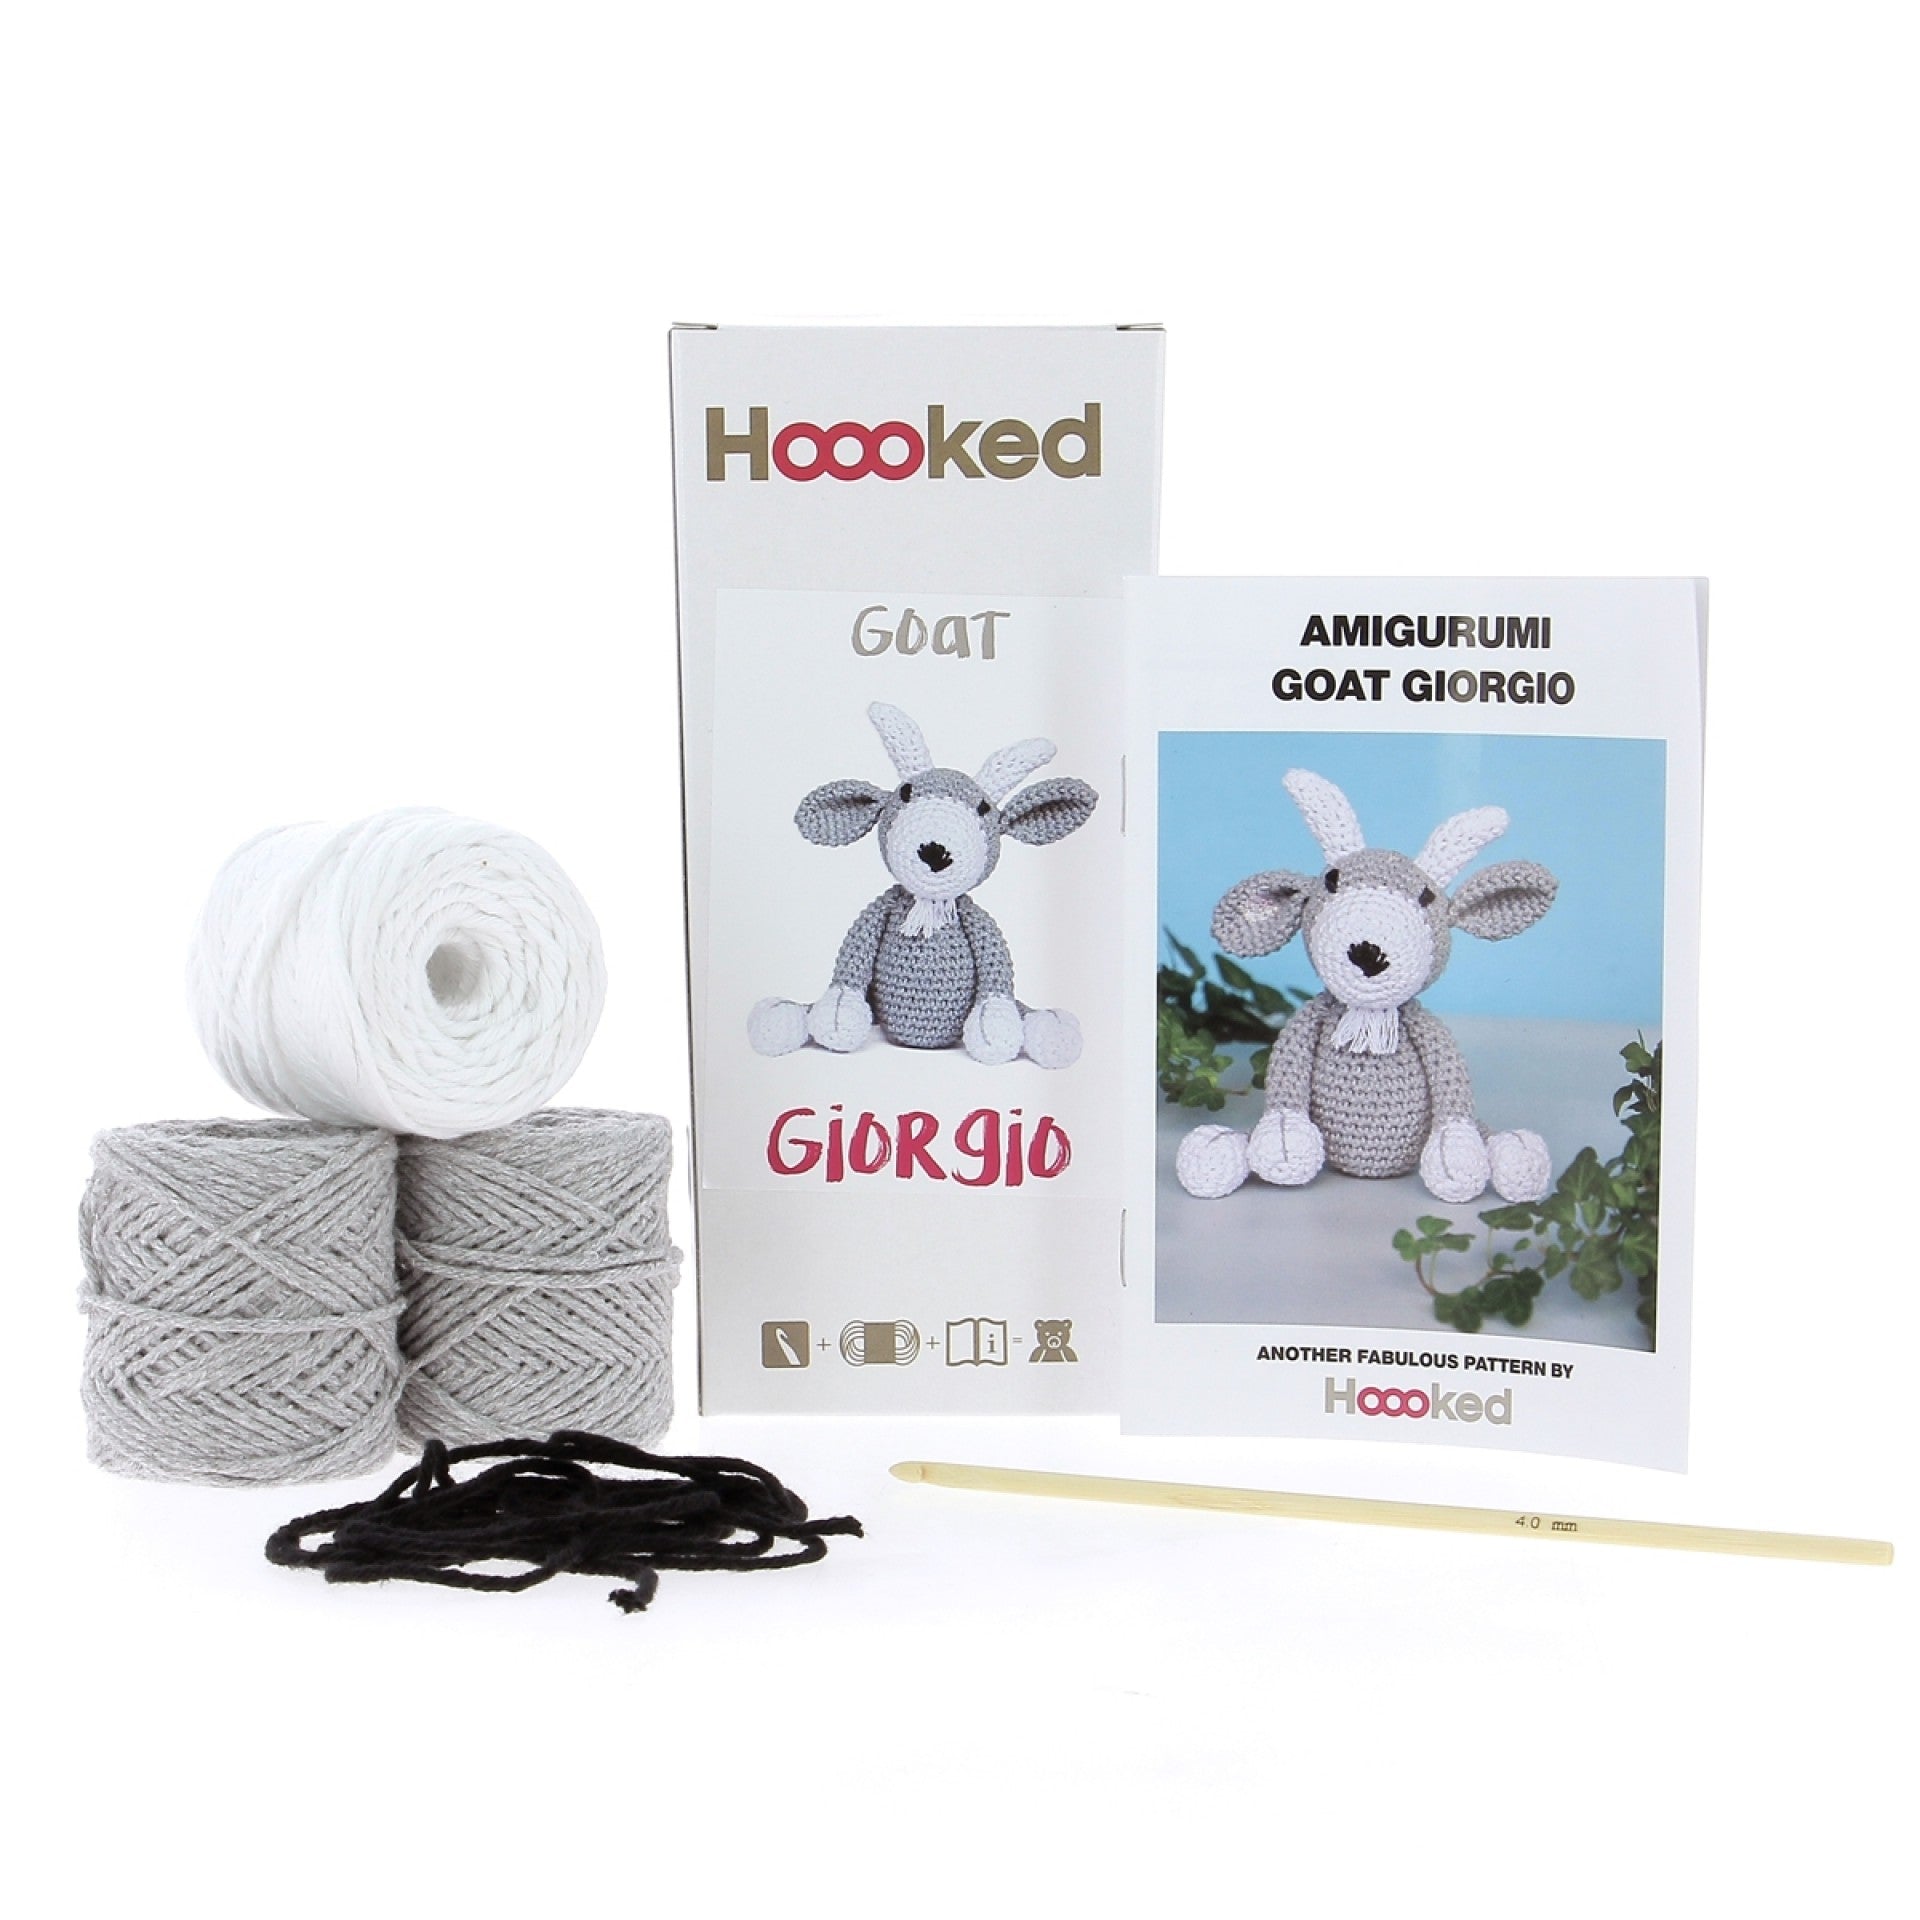 Goat Giorgio Hoooked Crochet Kit with Eco Barbante Yarn